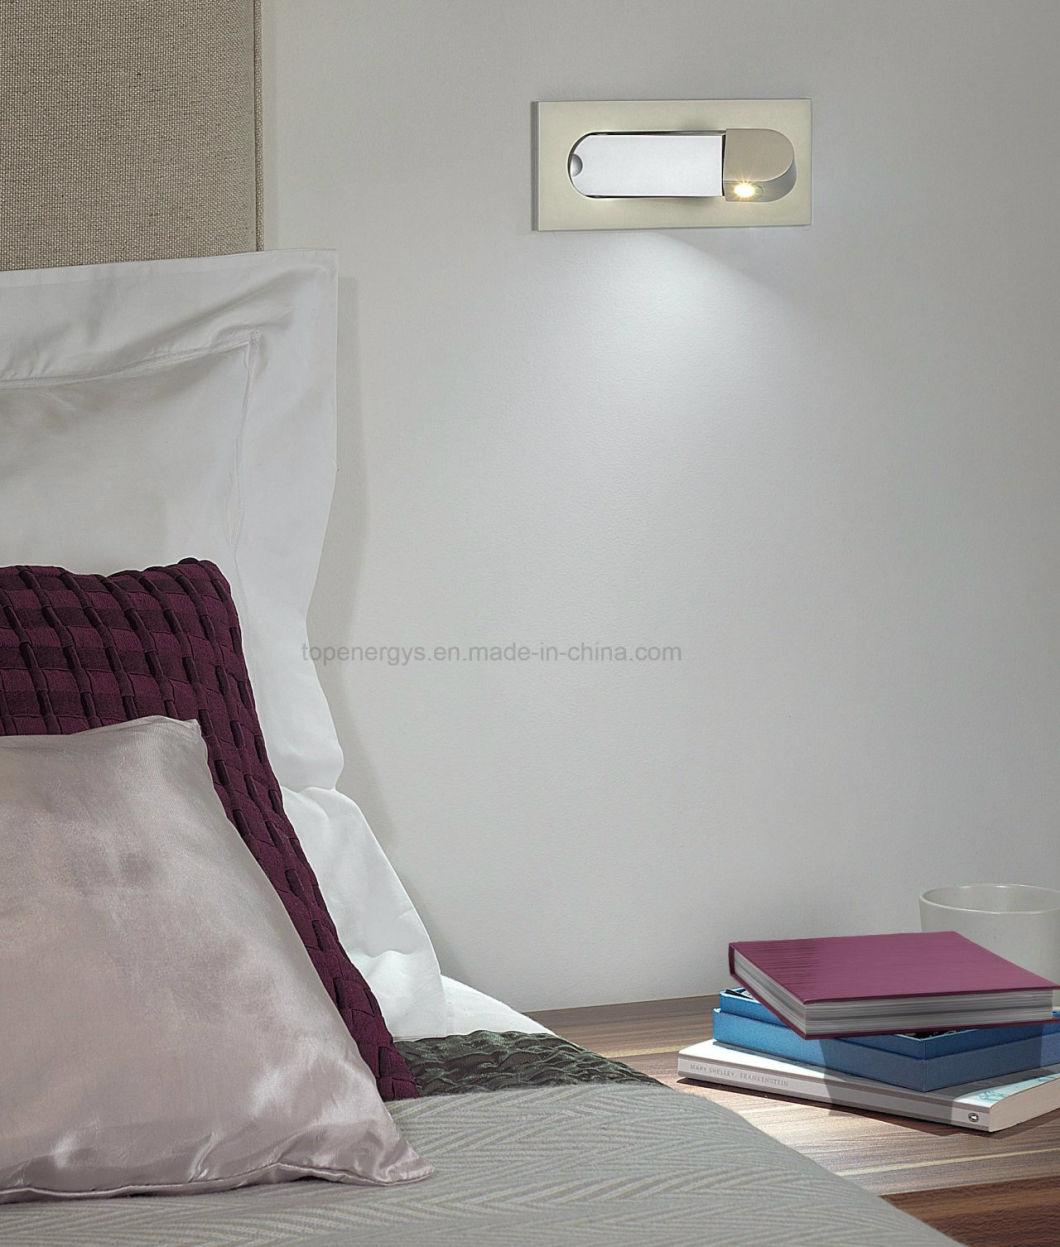 Rotatable LED Wall Lamp Bh-005 Decorative Adjustable Headboard Light Hotel Bedside Reading Light